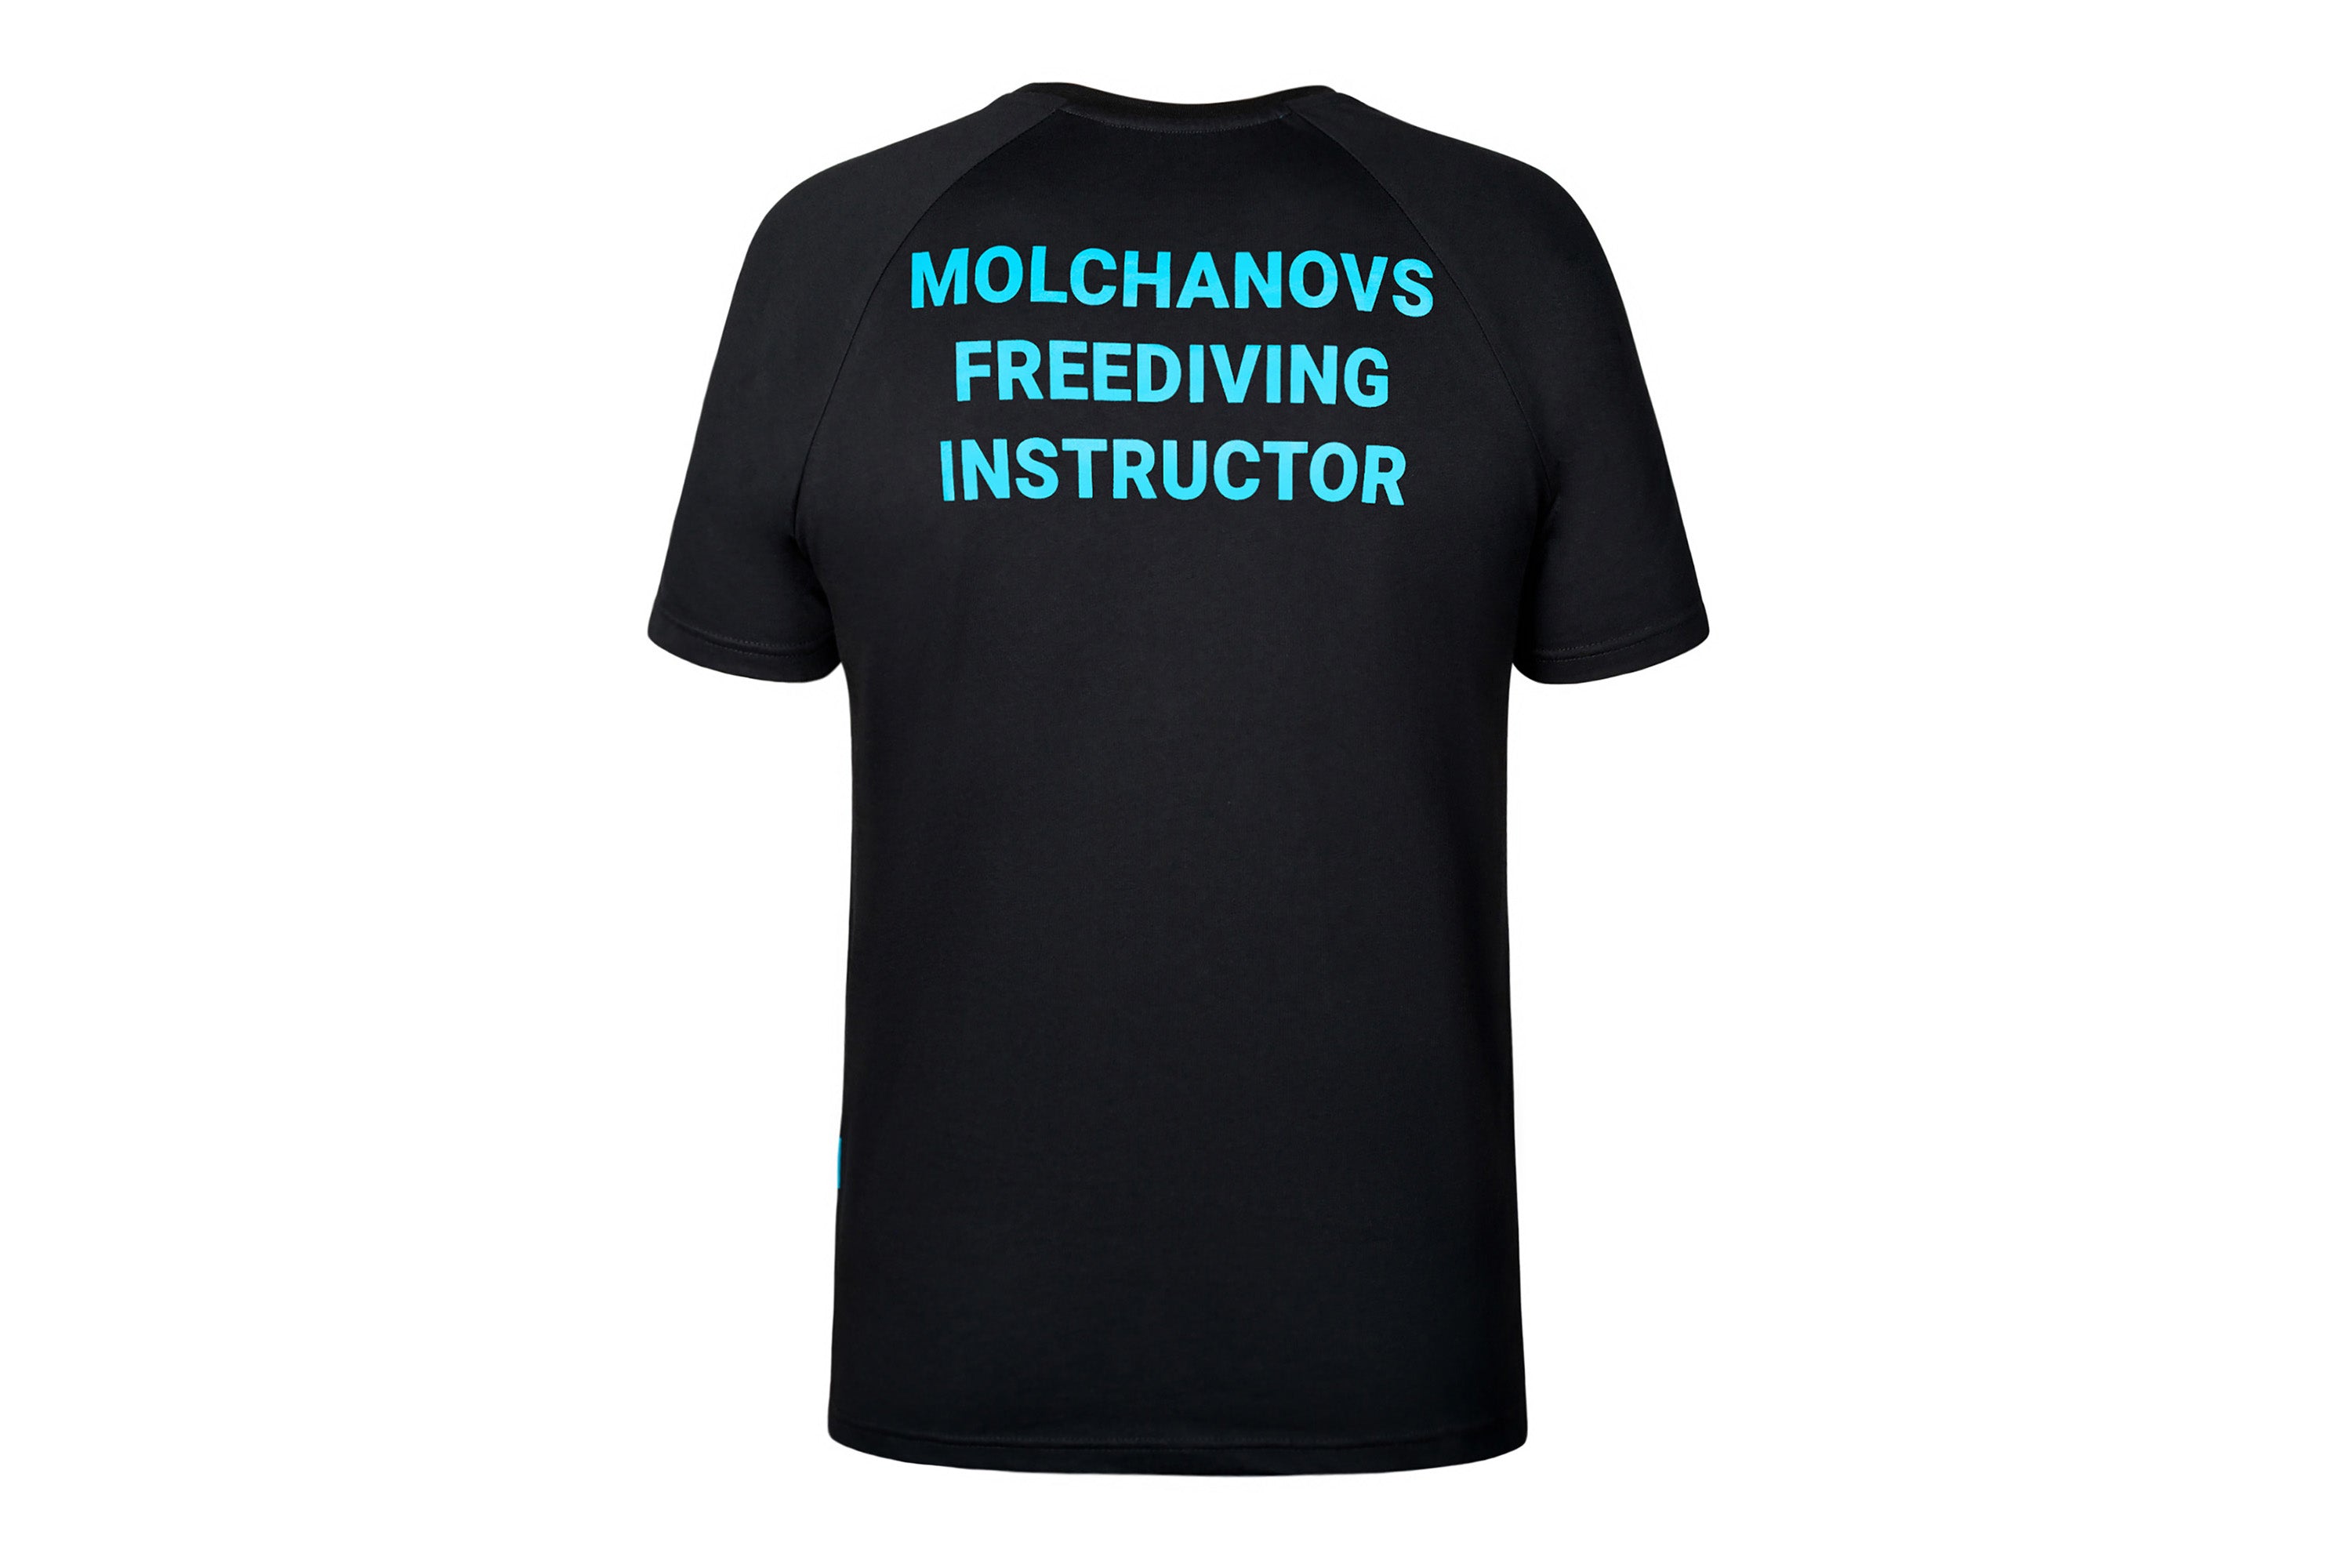 Molchanovs 自由潜水教练 Tee